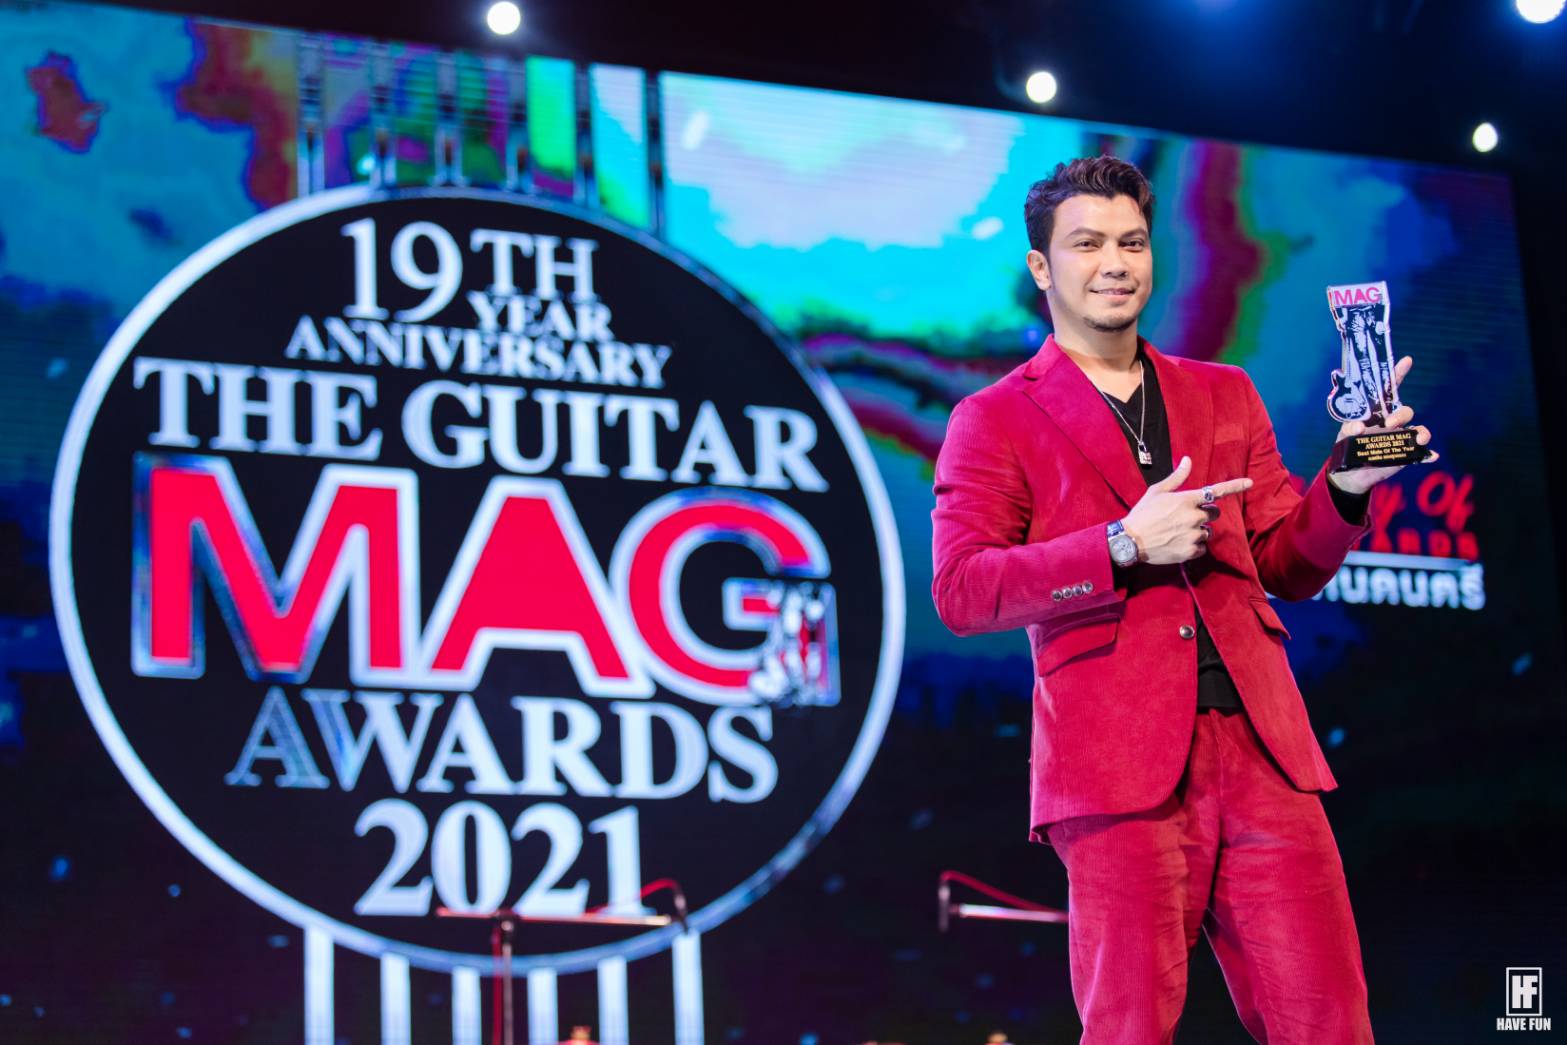  The Guitar Mag Awards 2021